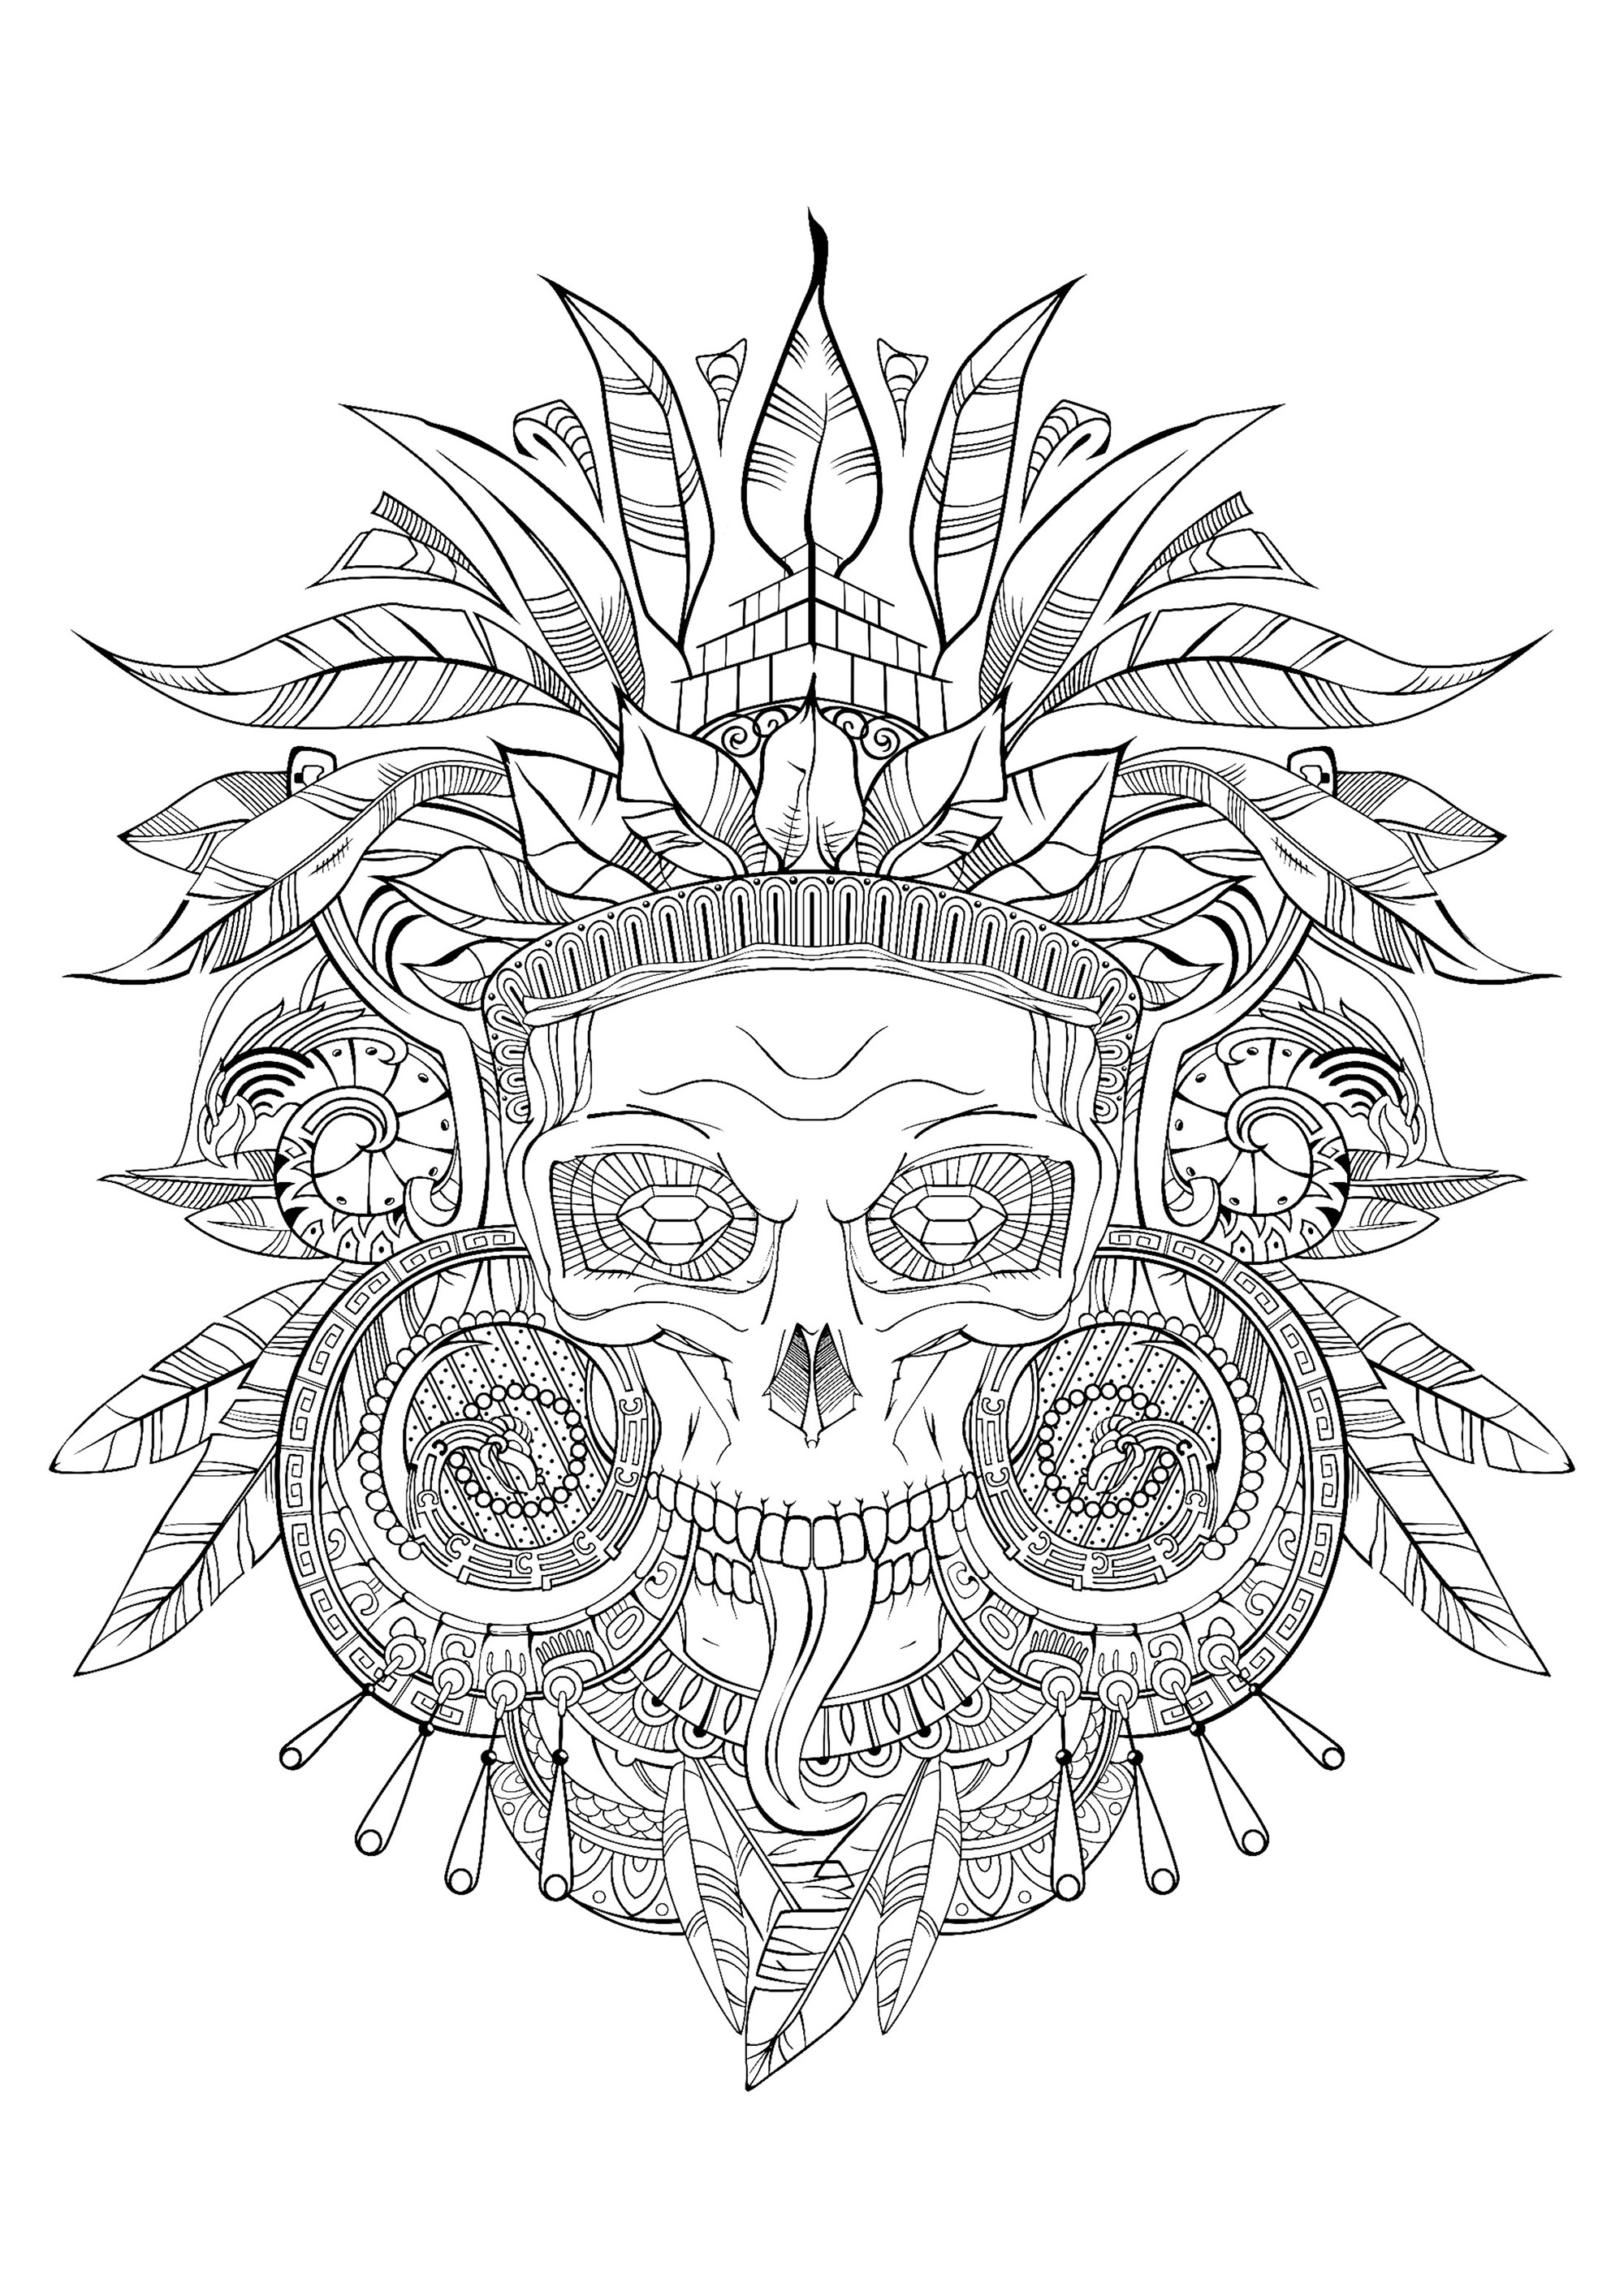 Aztec skull black white - Mayans & Incas Adult Coloring Pages